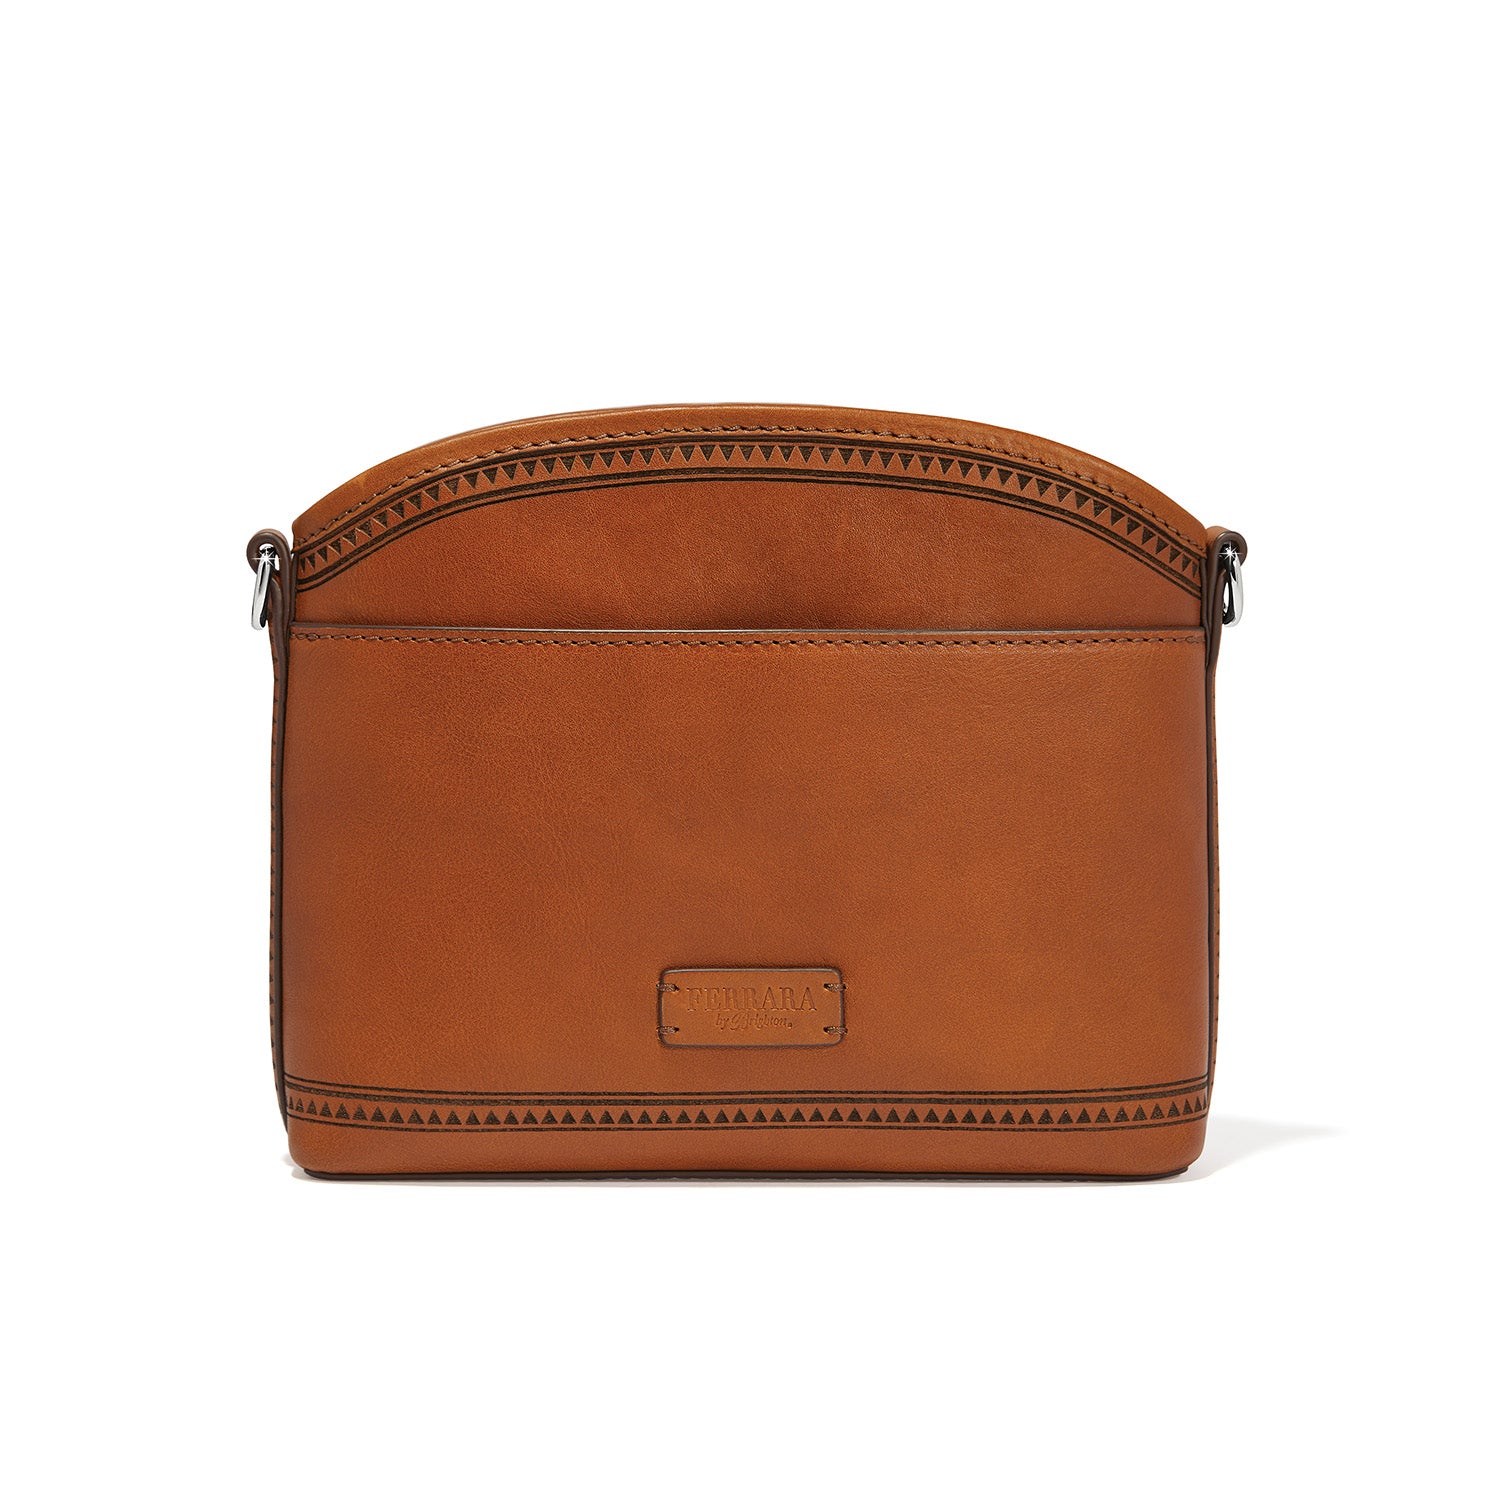 Brighton crossbody purse handbag is brand New with... - Depop